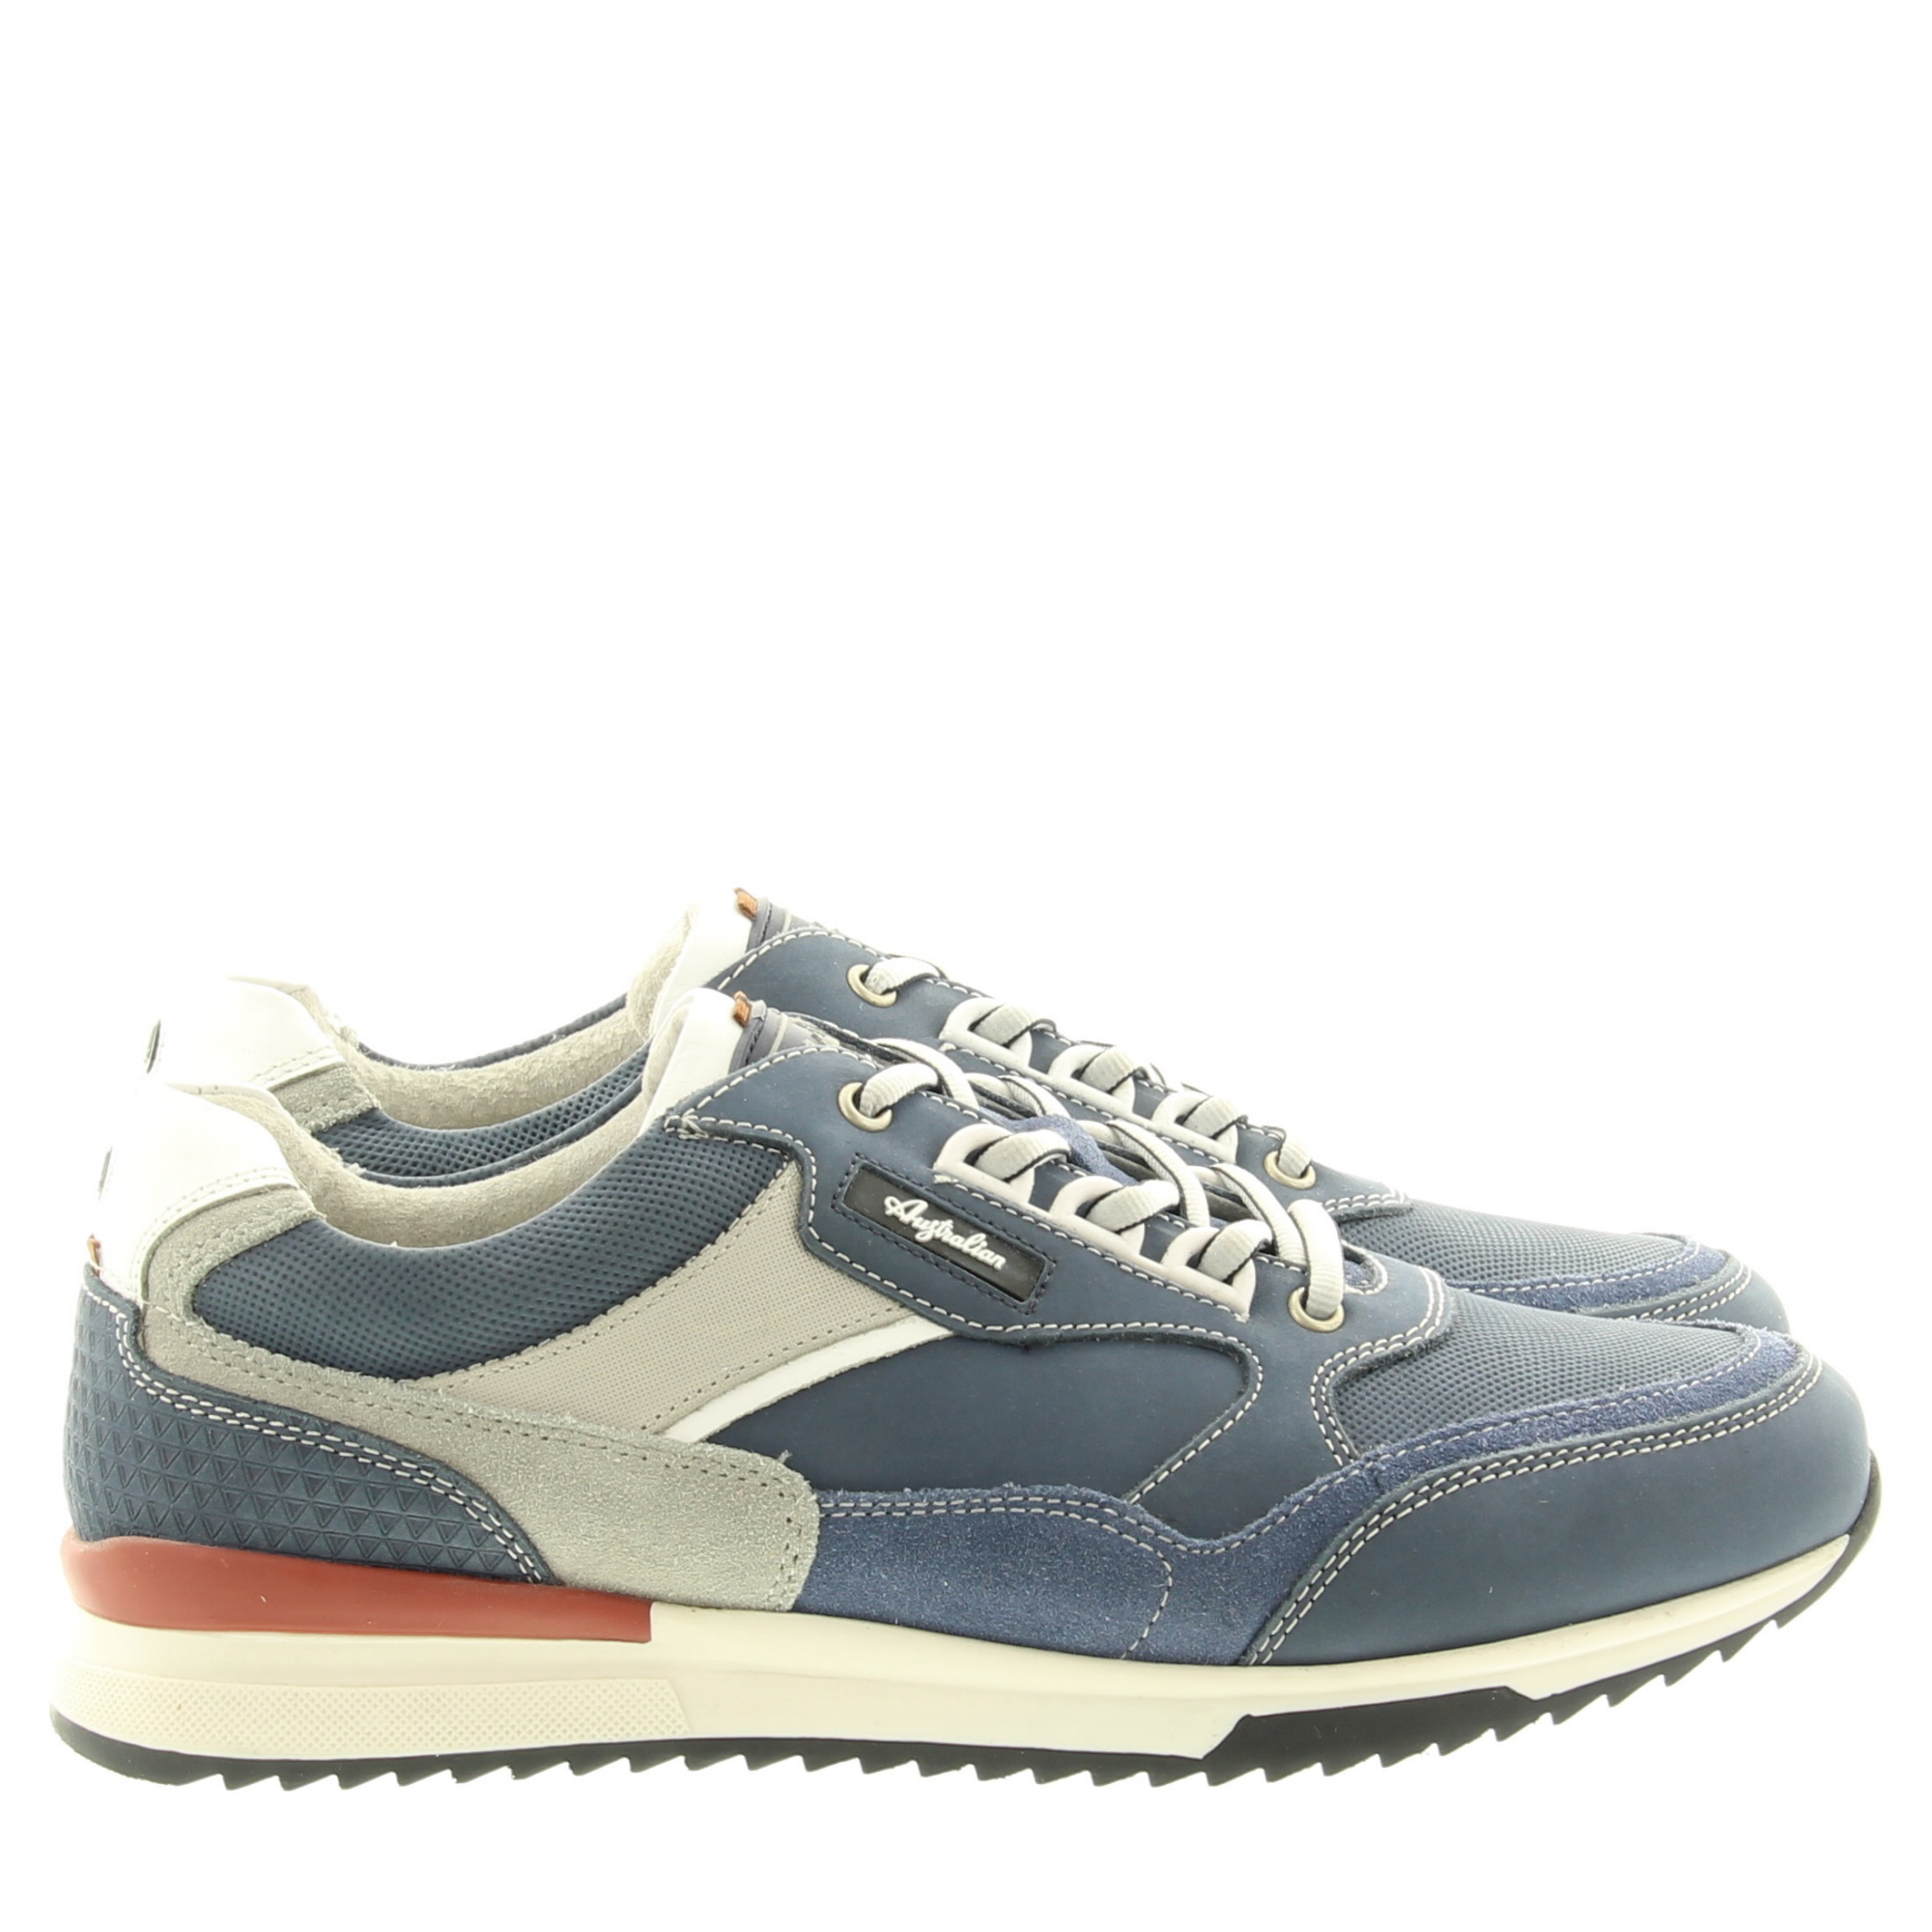 Australian Footwear Roberto 15.1604.01 SJK Blue Grey Brick